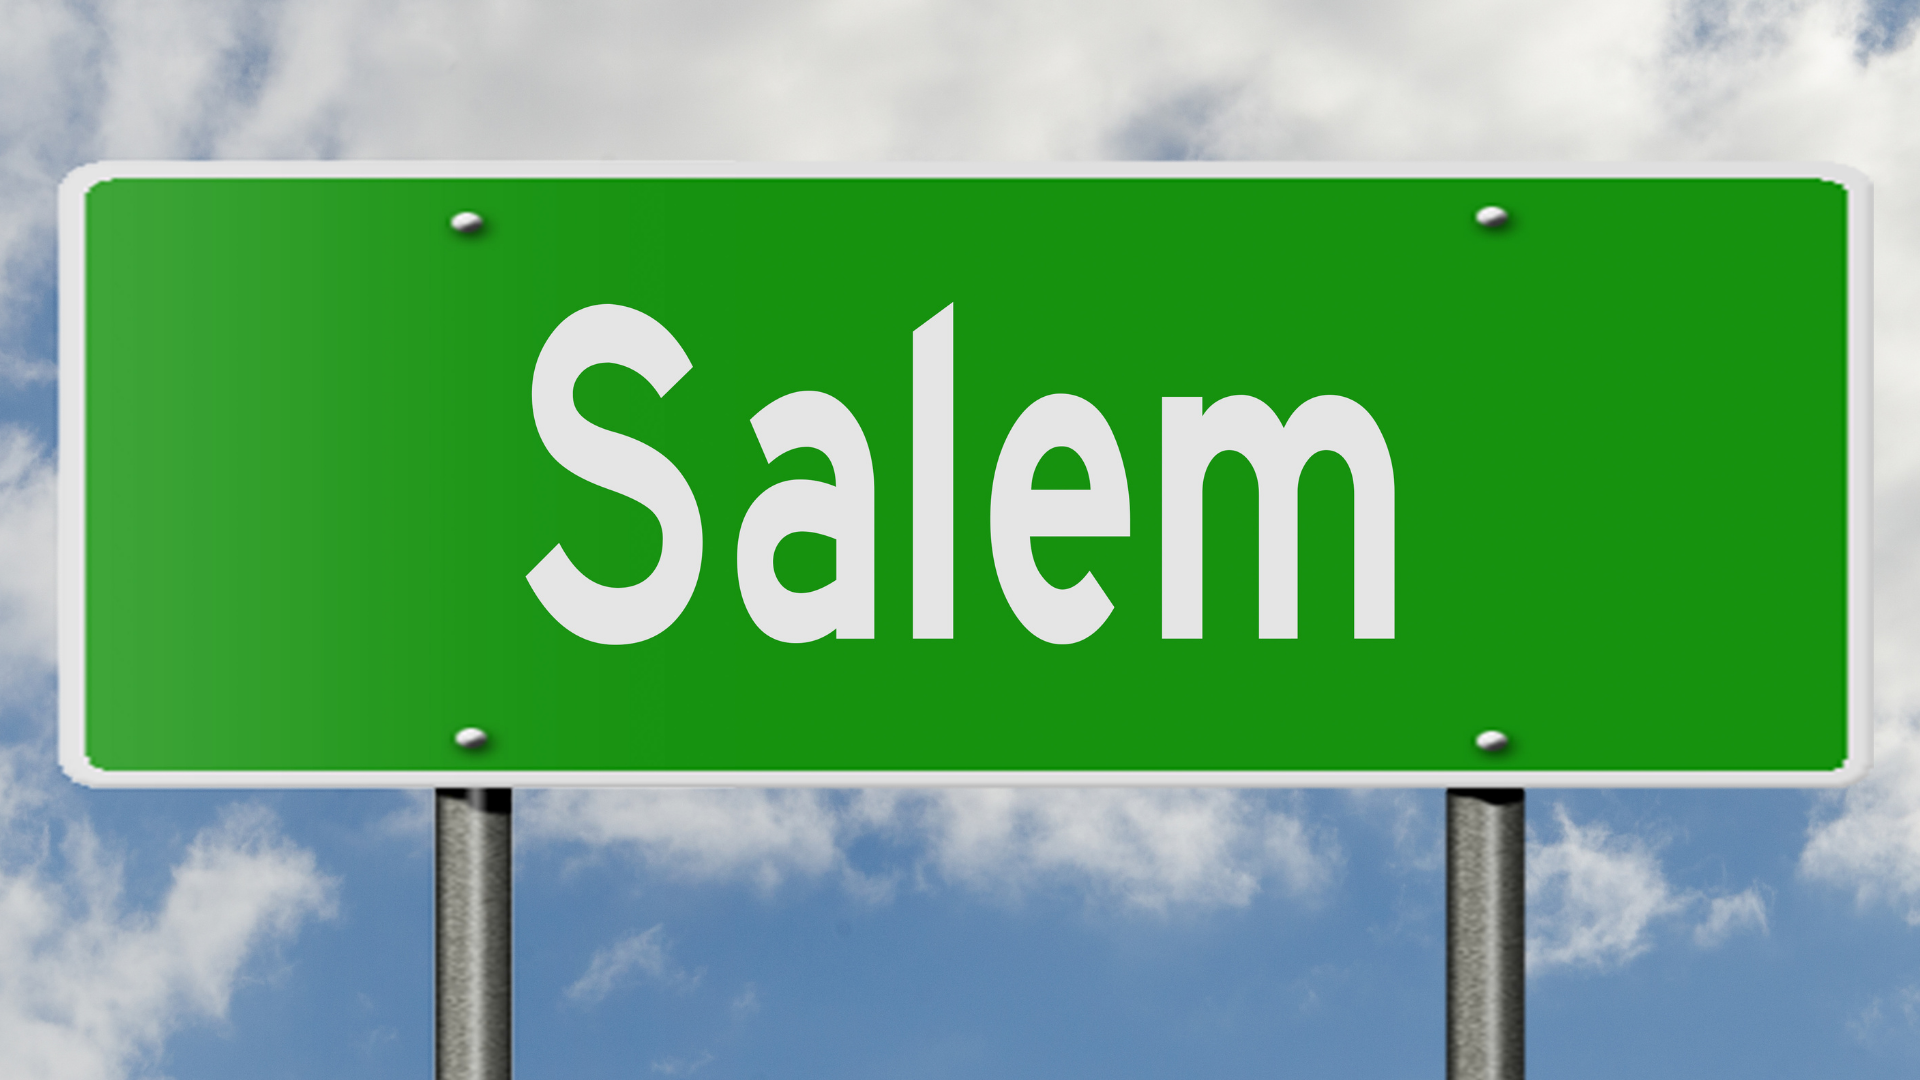 Salem street sign.